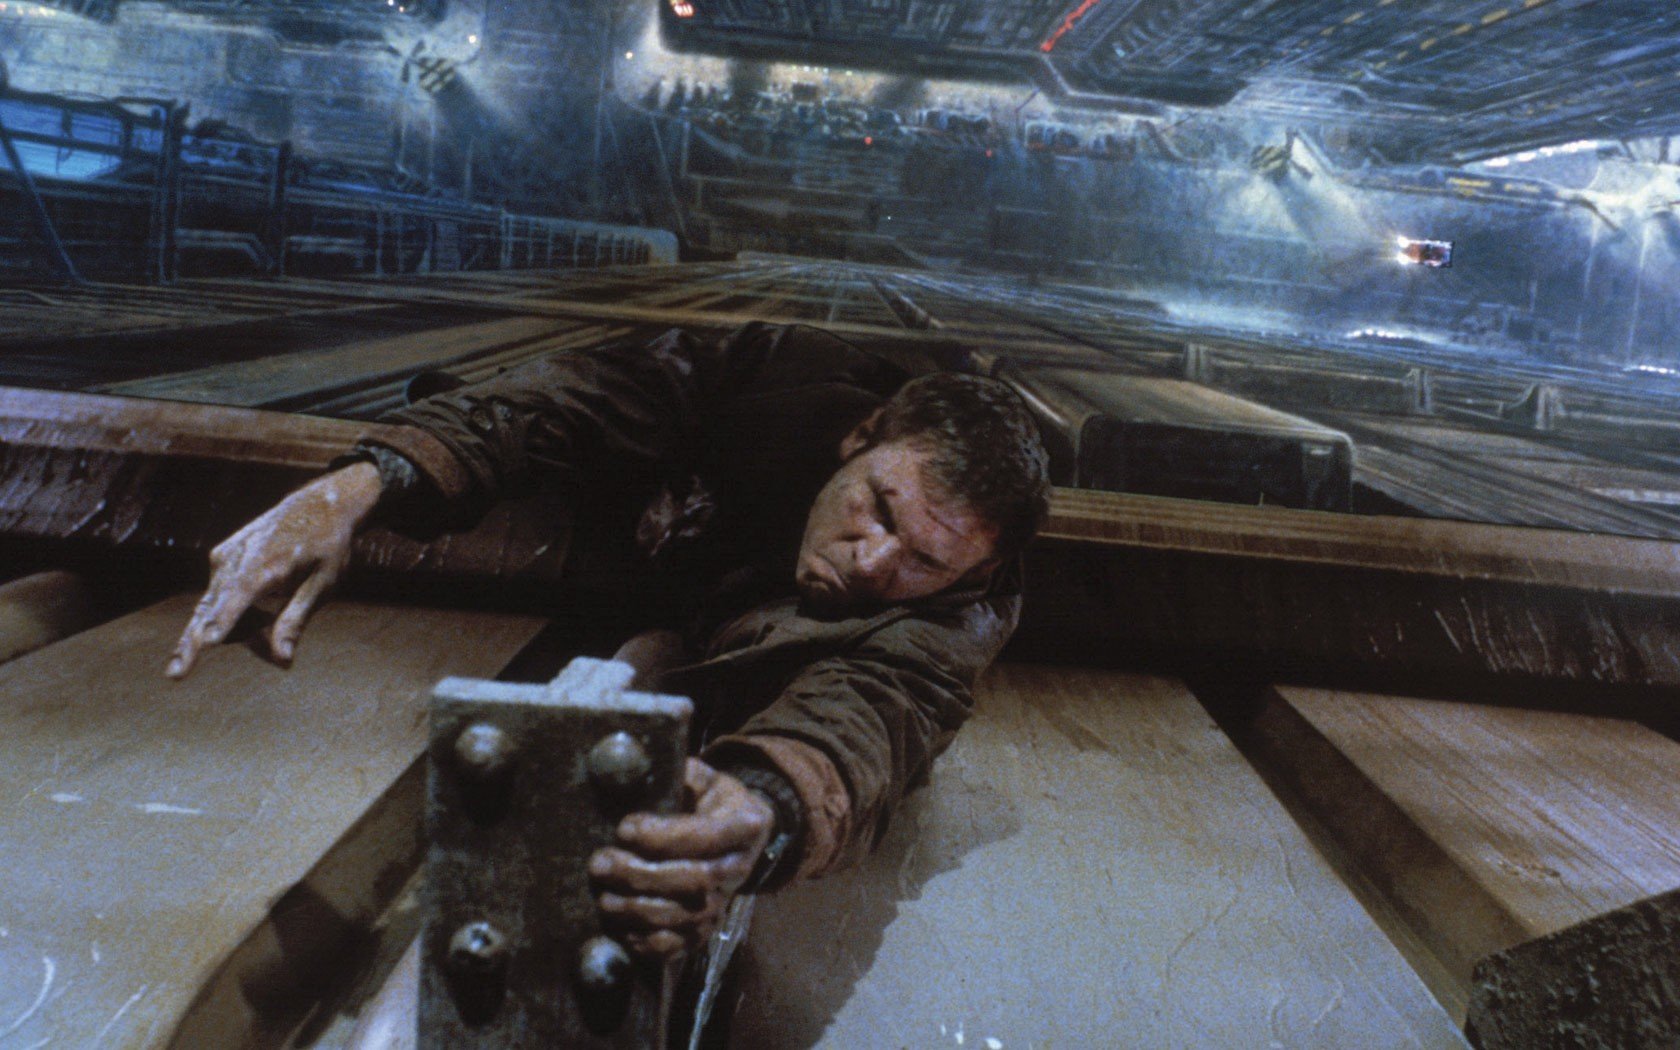 Harrison Ford in a still from Blade Runner (1982) directed by Ridley Scott. Photo: Matt Damon